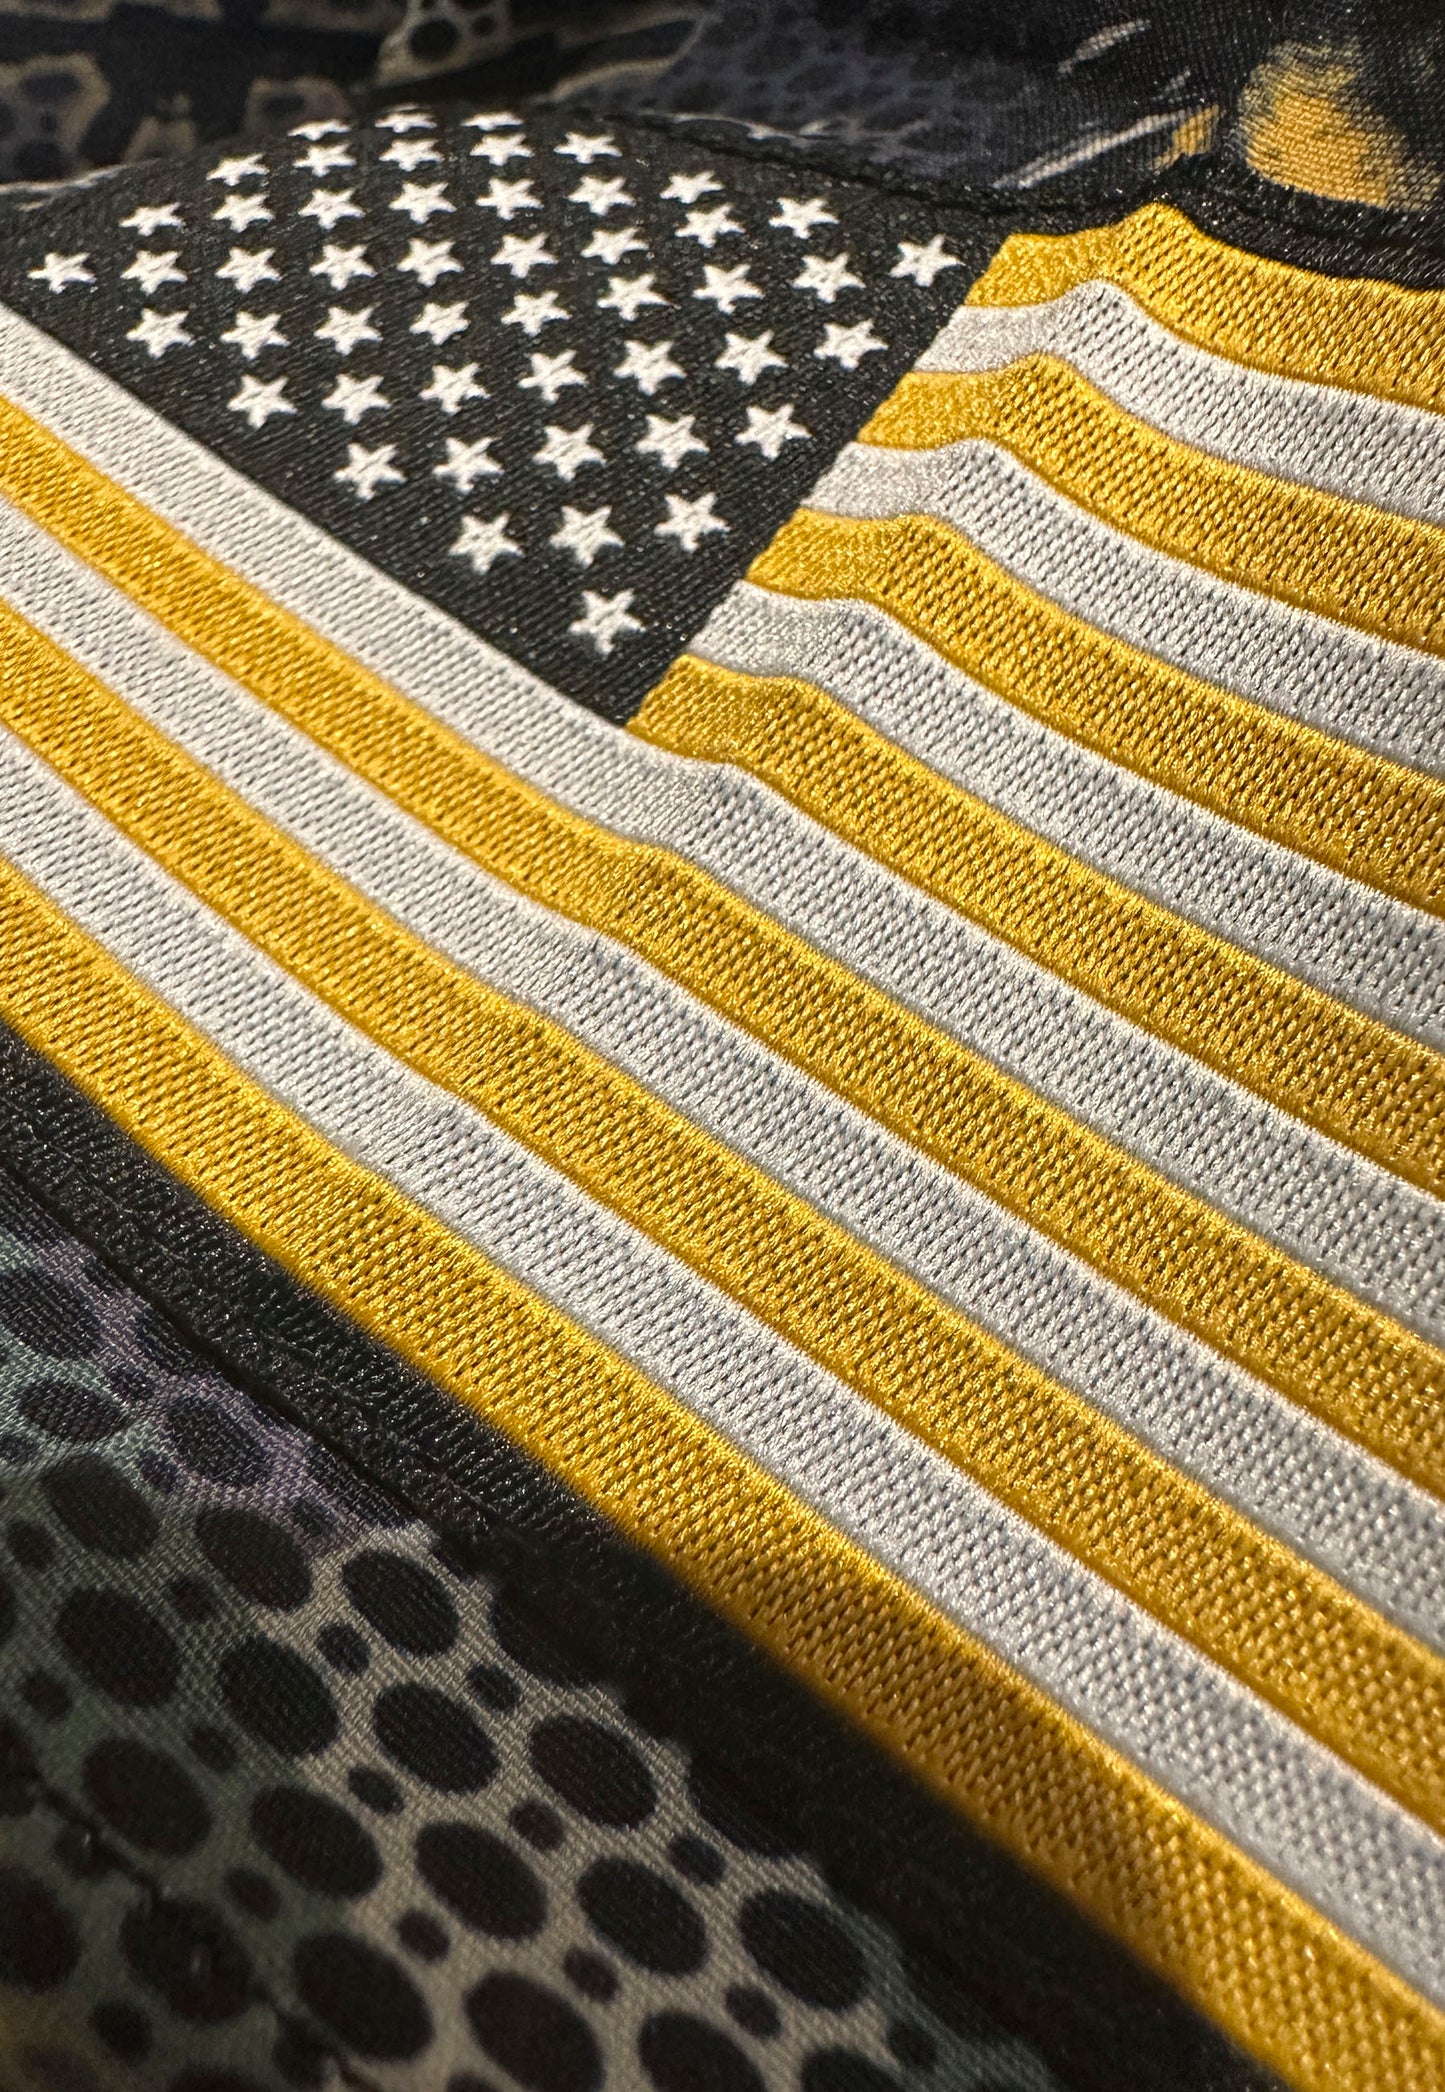 American Flag detail on second amendment shirt